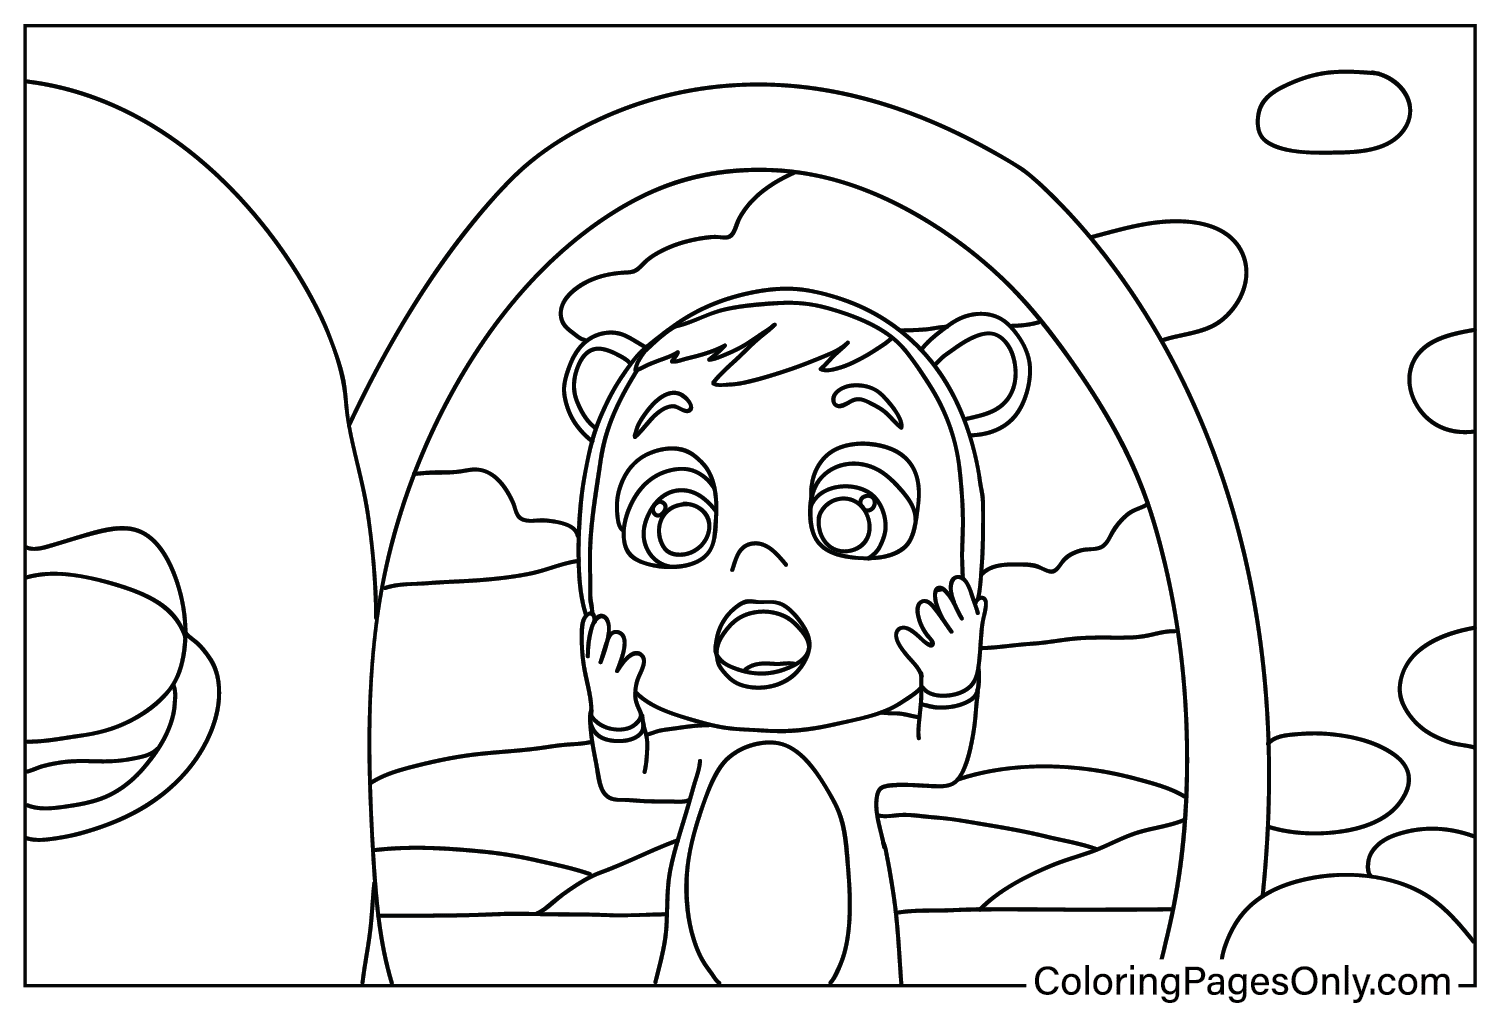 Раскраска Cry Babies из мультфильма Cry Babies